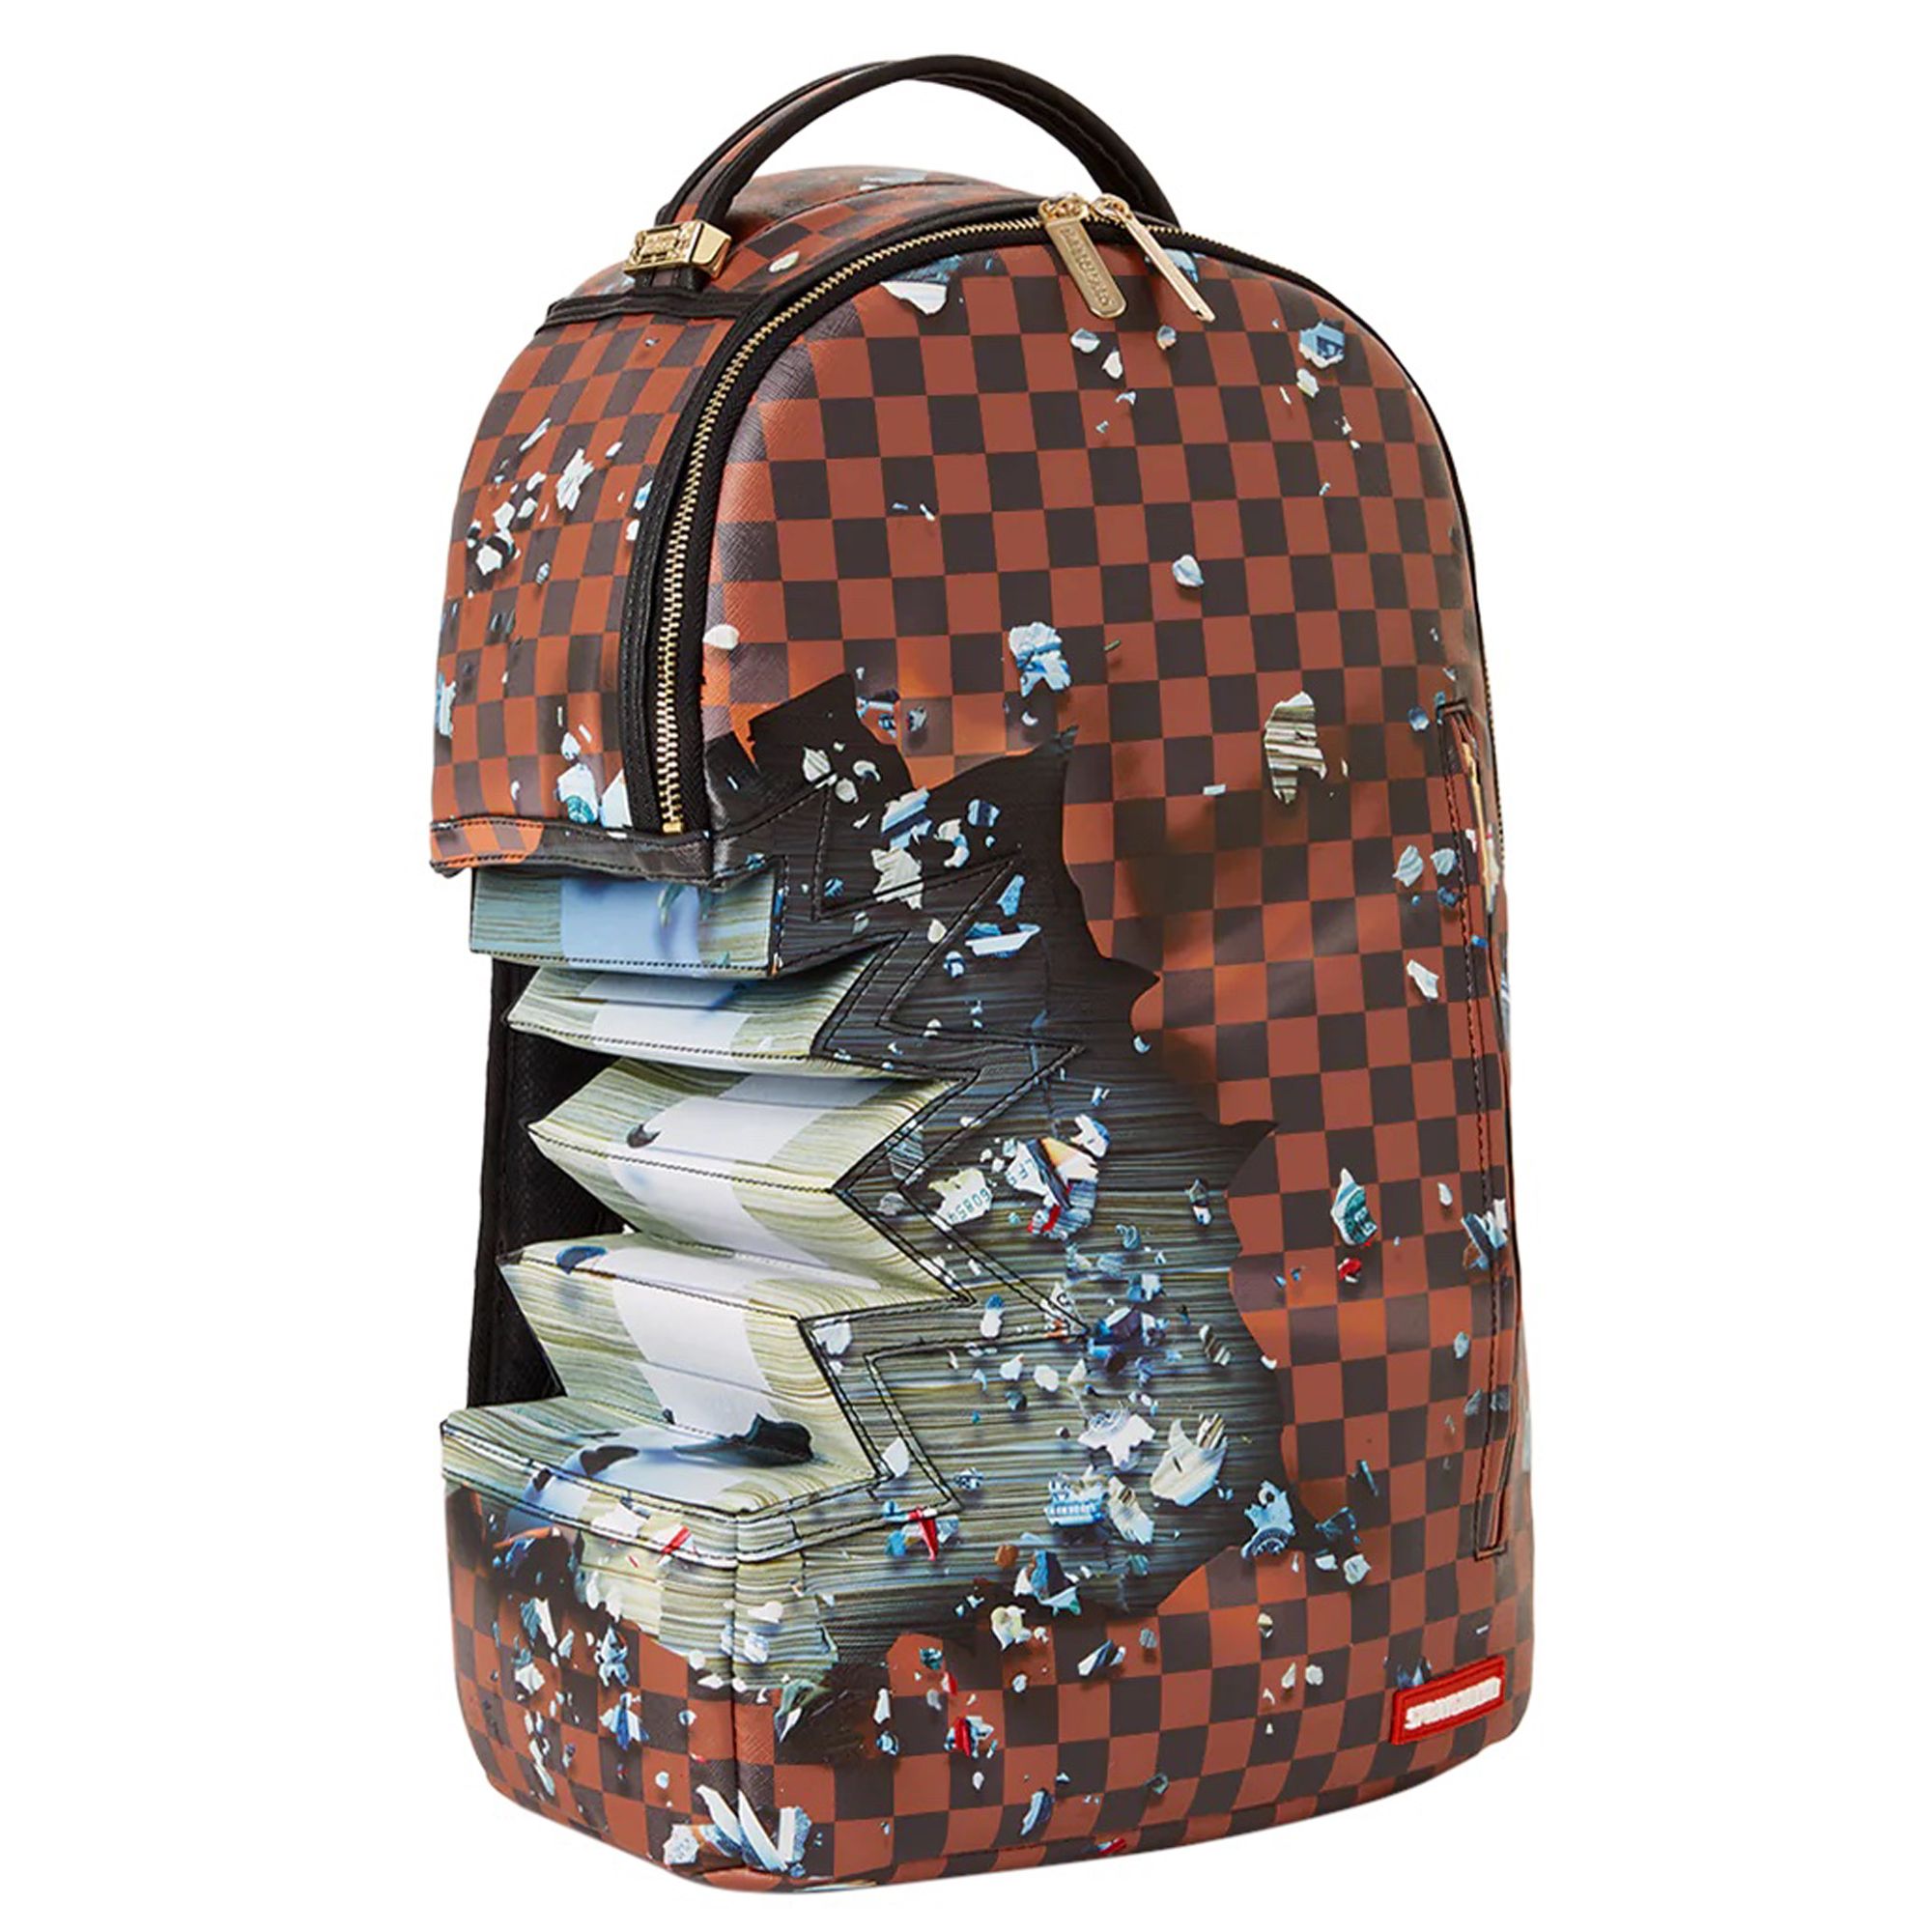 Backpacks Sprayground - Shark Bite Limited Edition backpack in white -  910B2963NSZ